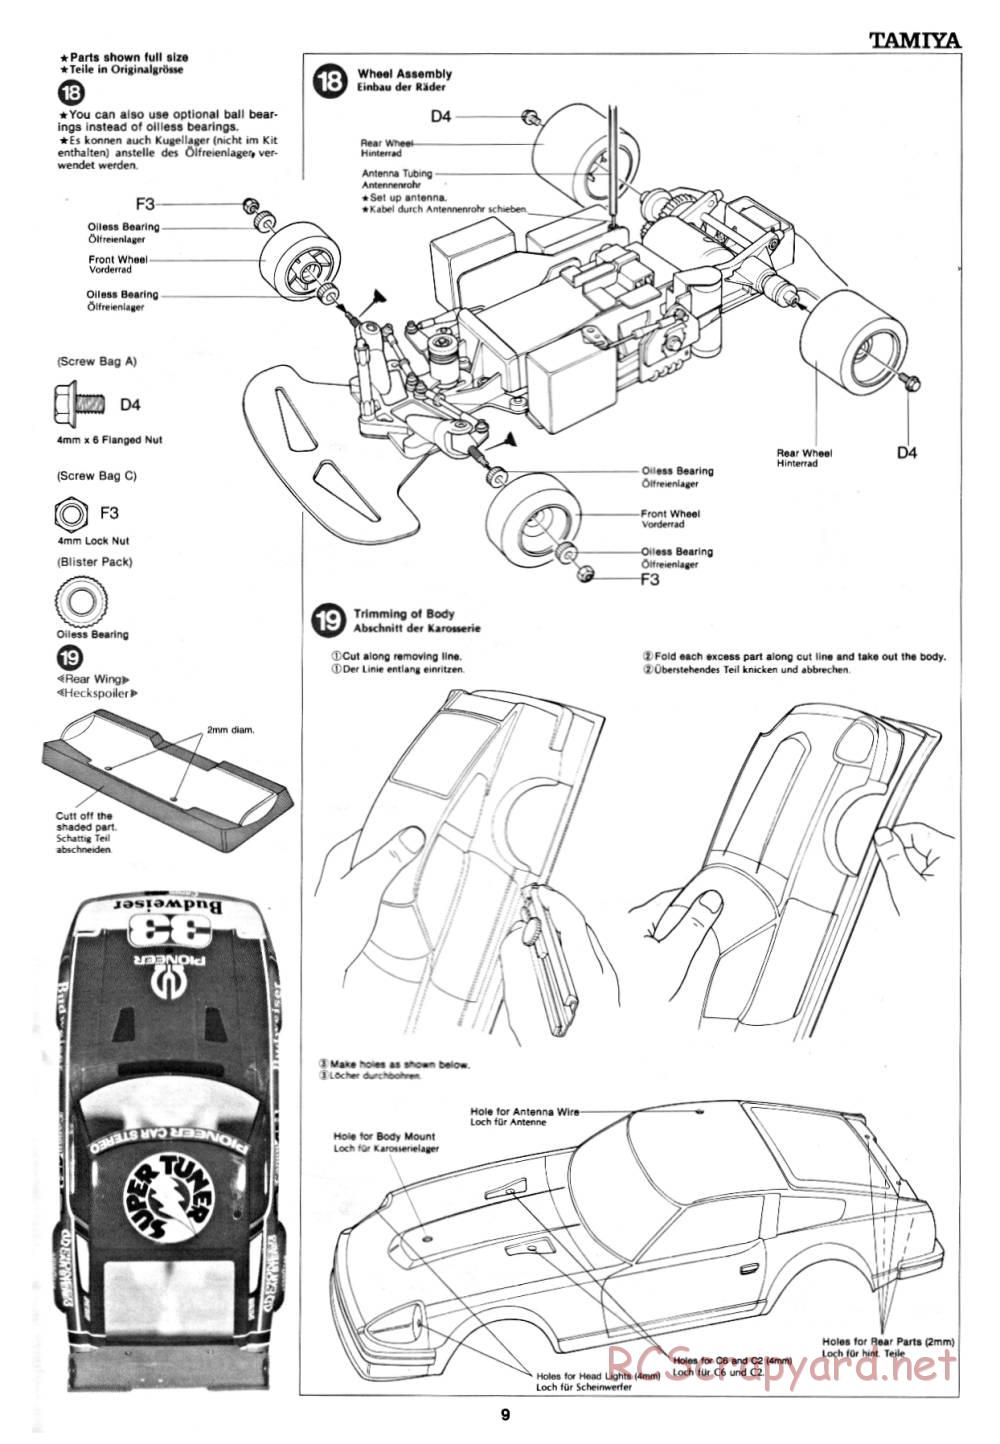 Tamiya - Datsun 280ZX - 58022 - Manual - Page 9